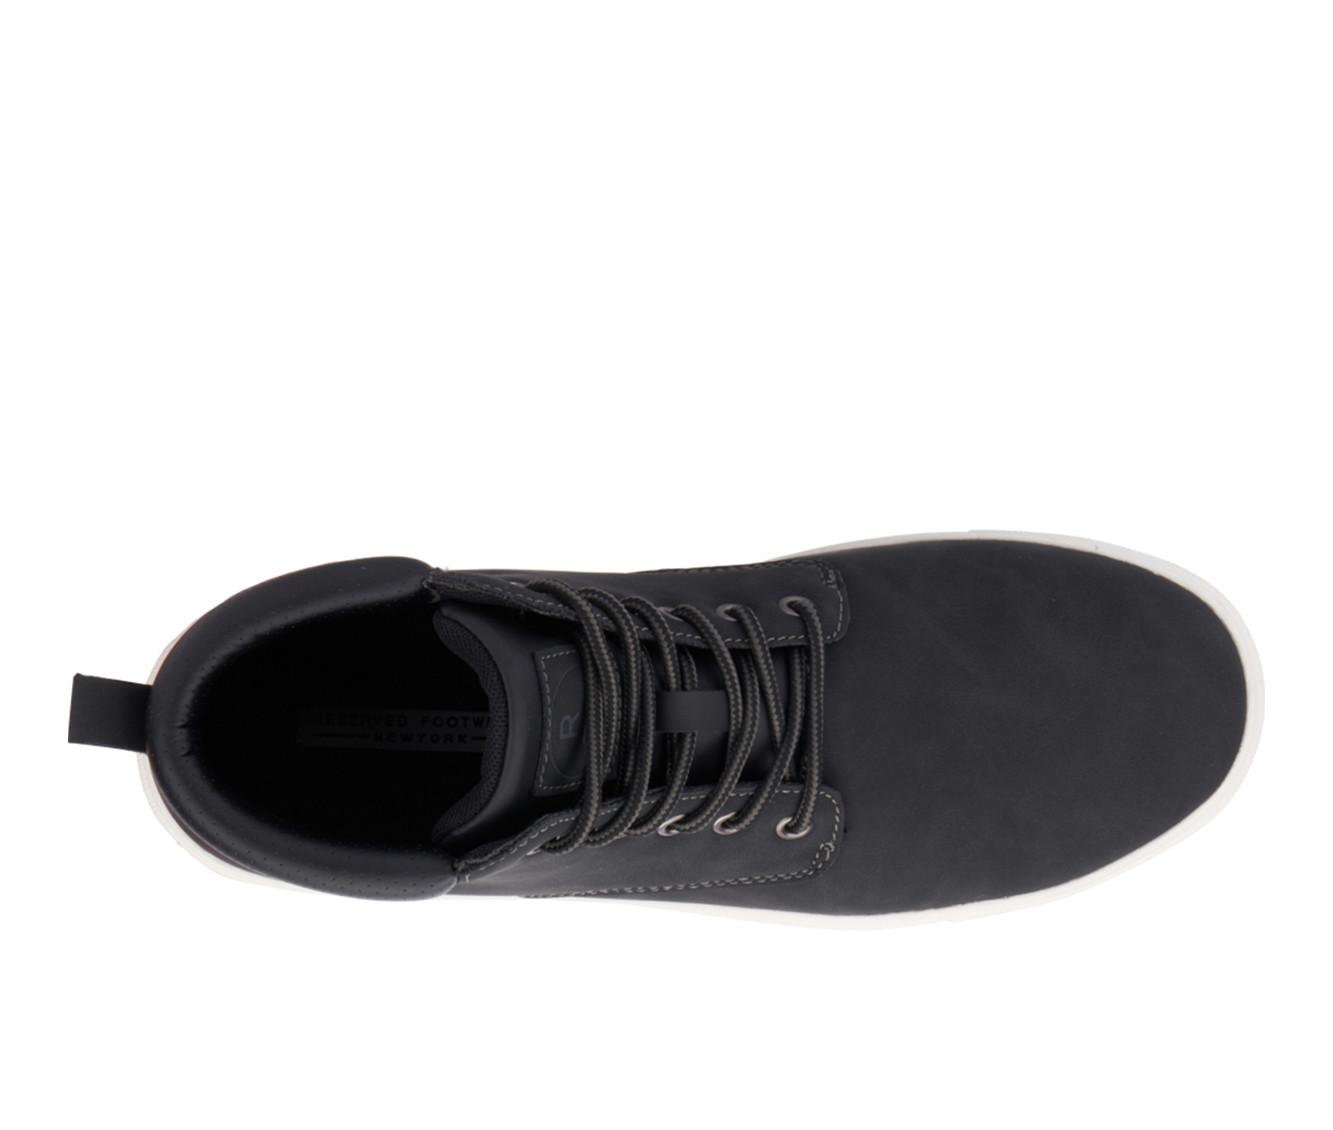 Men's Reserved Footwear Julian Casual Lace Up Sneaker Boots